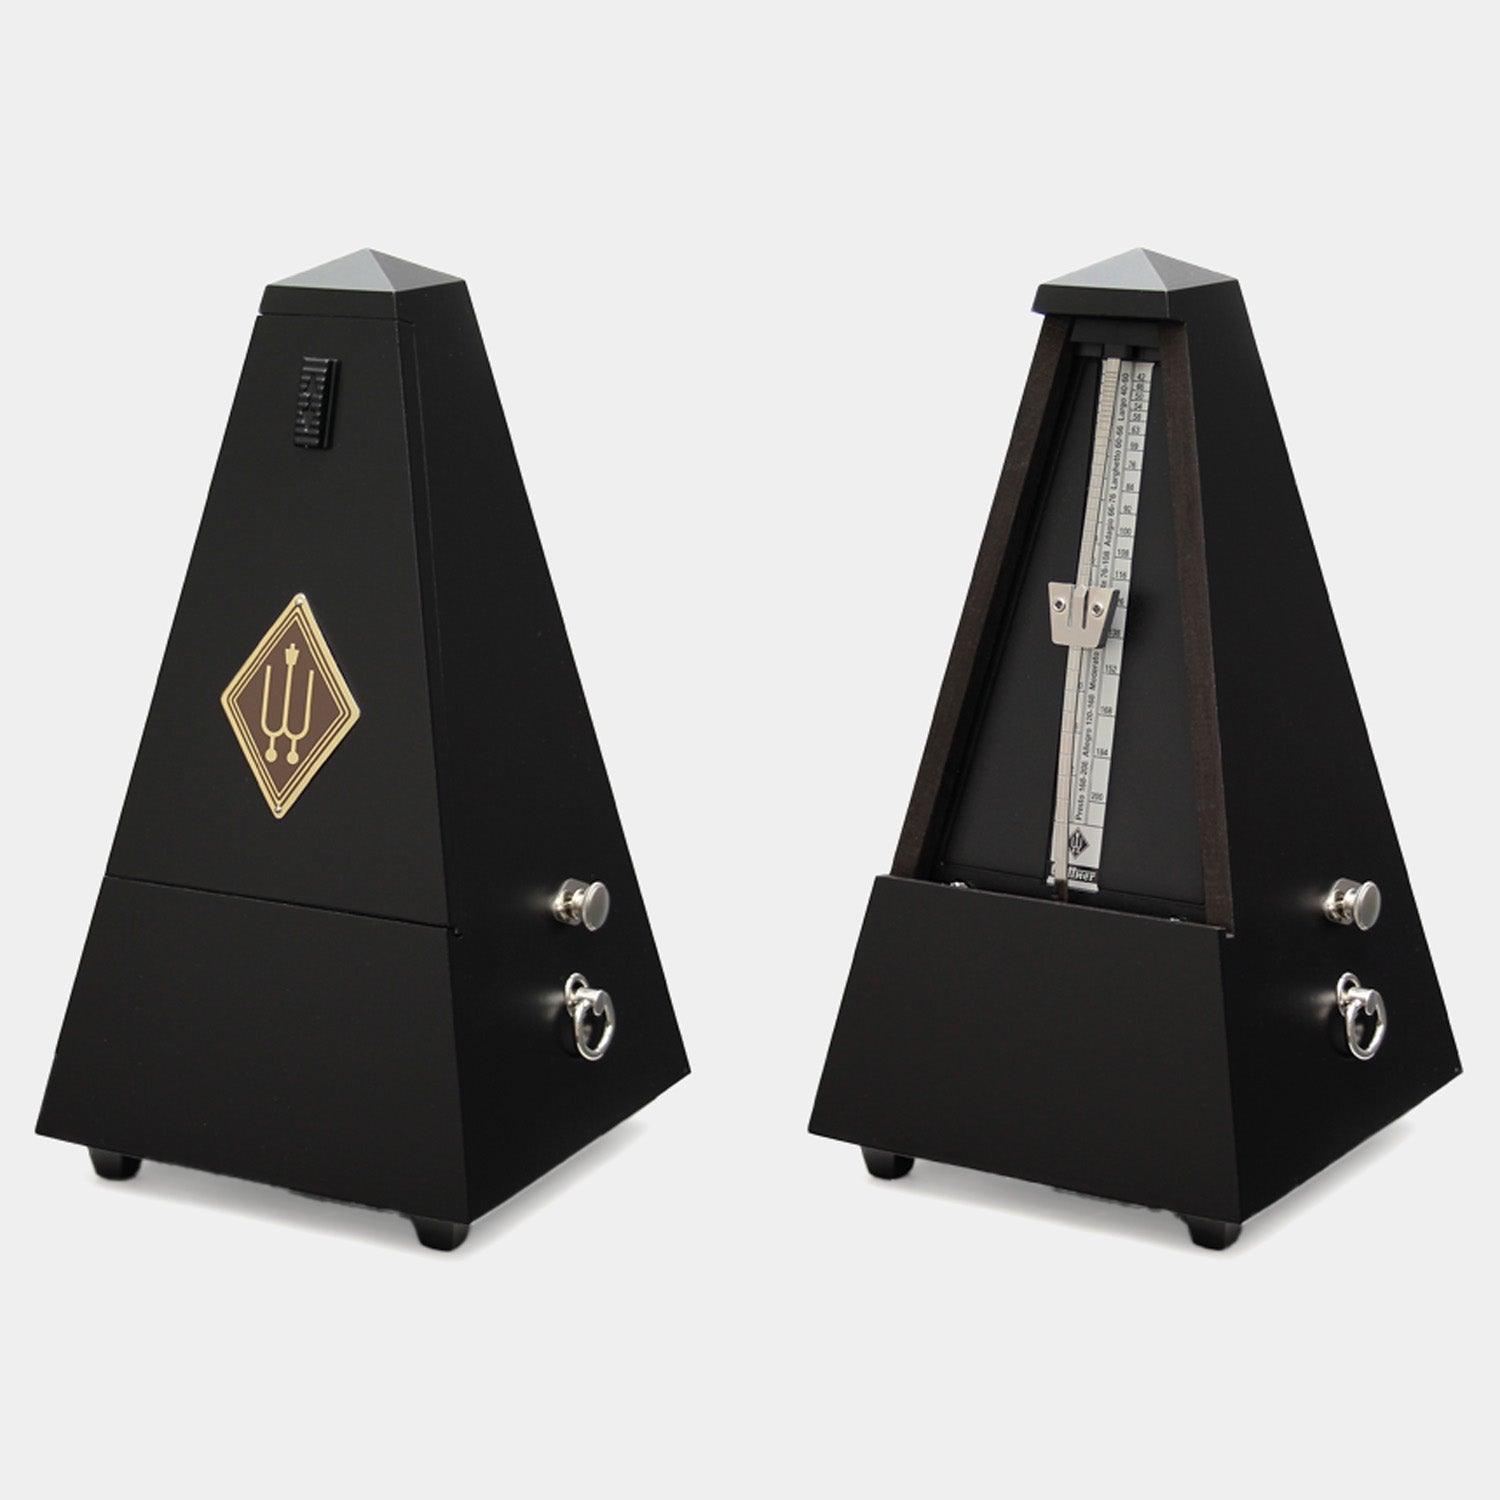 Metronome in Matt Black Solid Wooden Casing